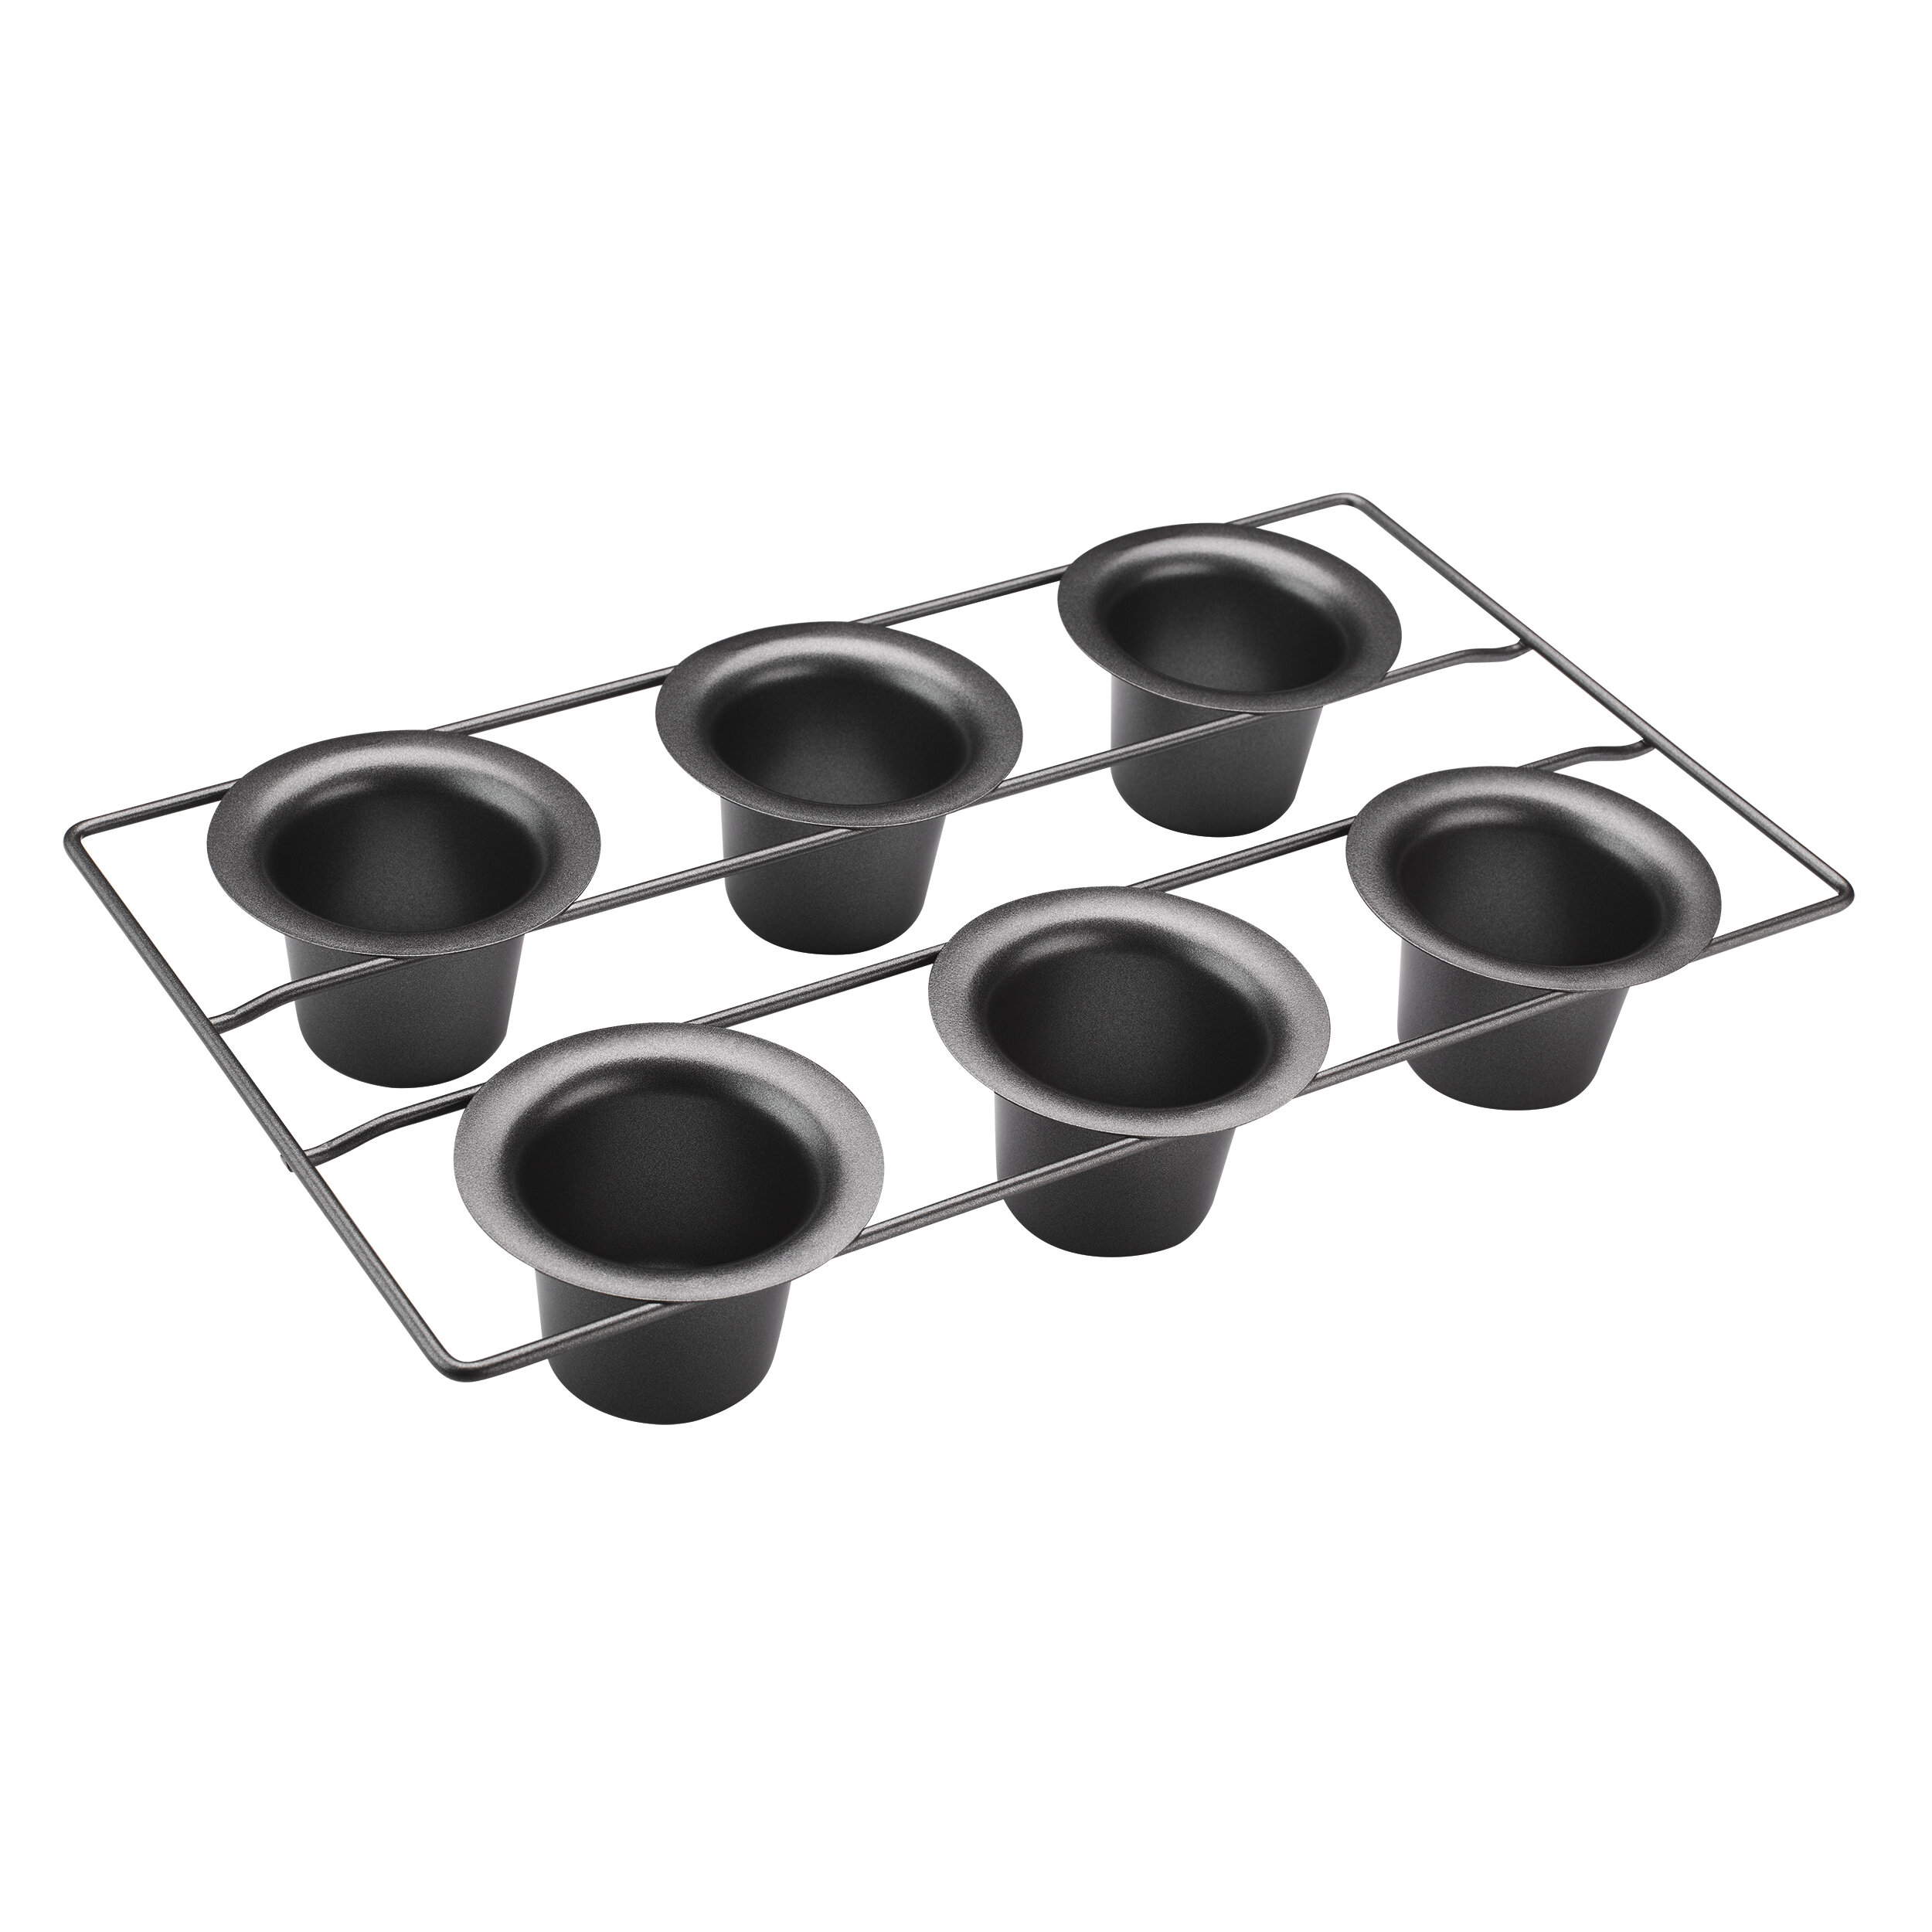  12-Cup Silicone Professional Non-Stick Popover Pans